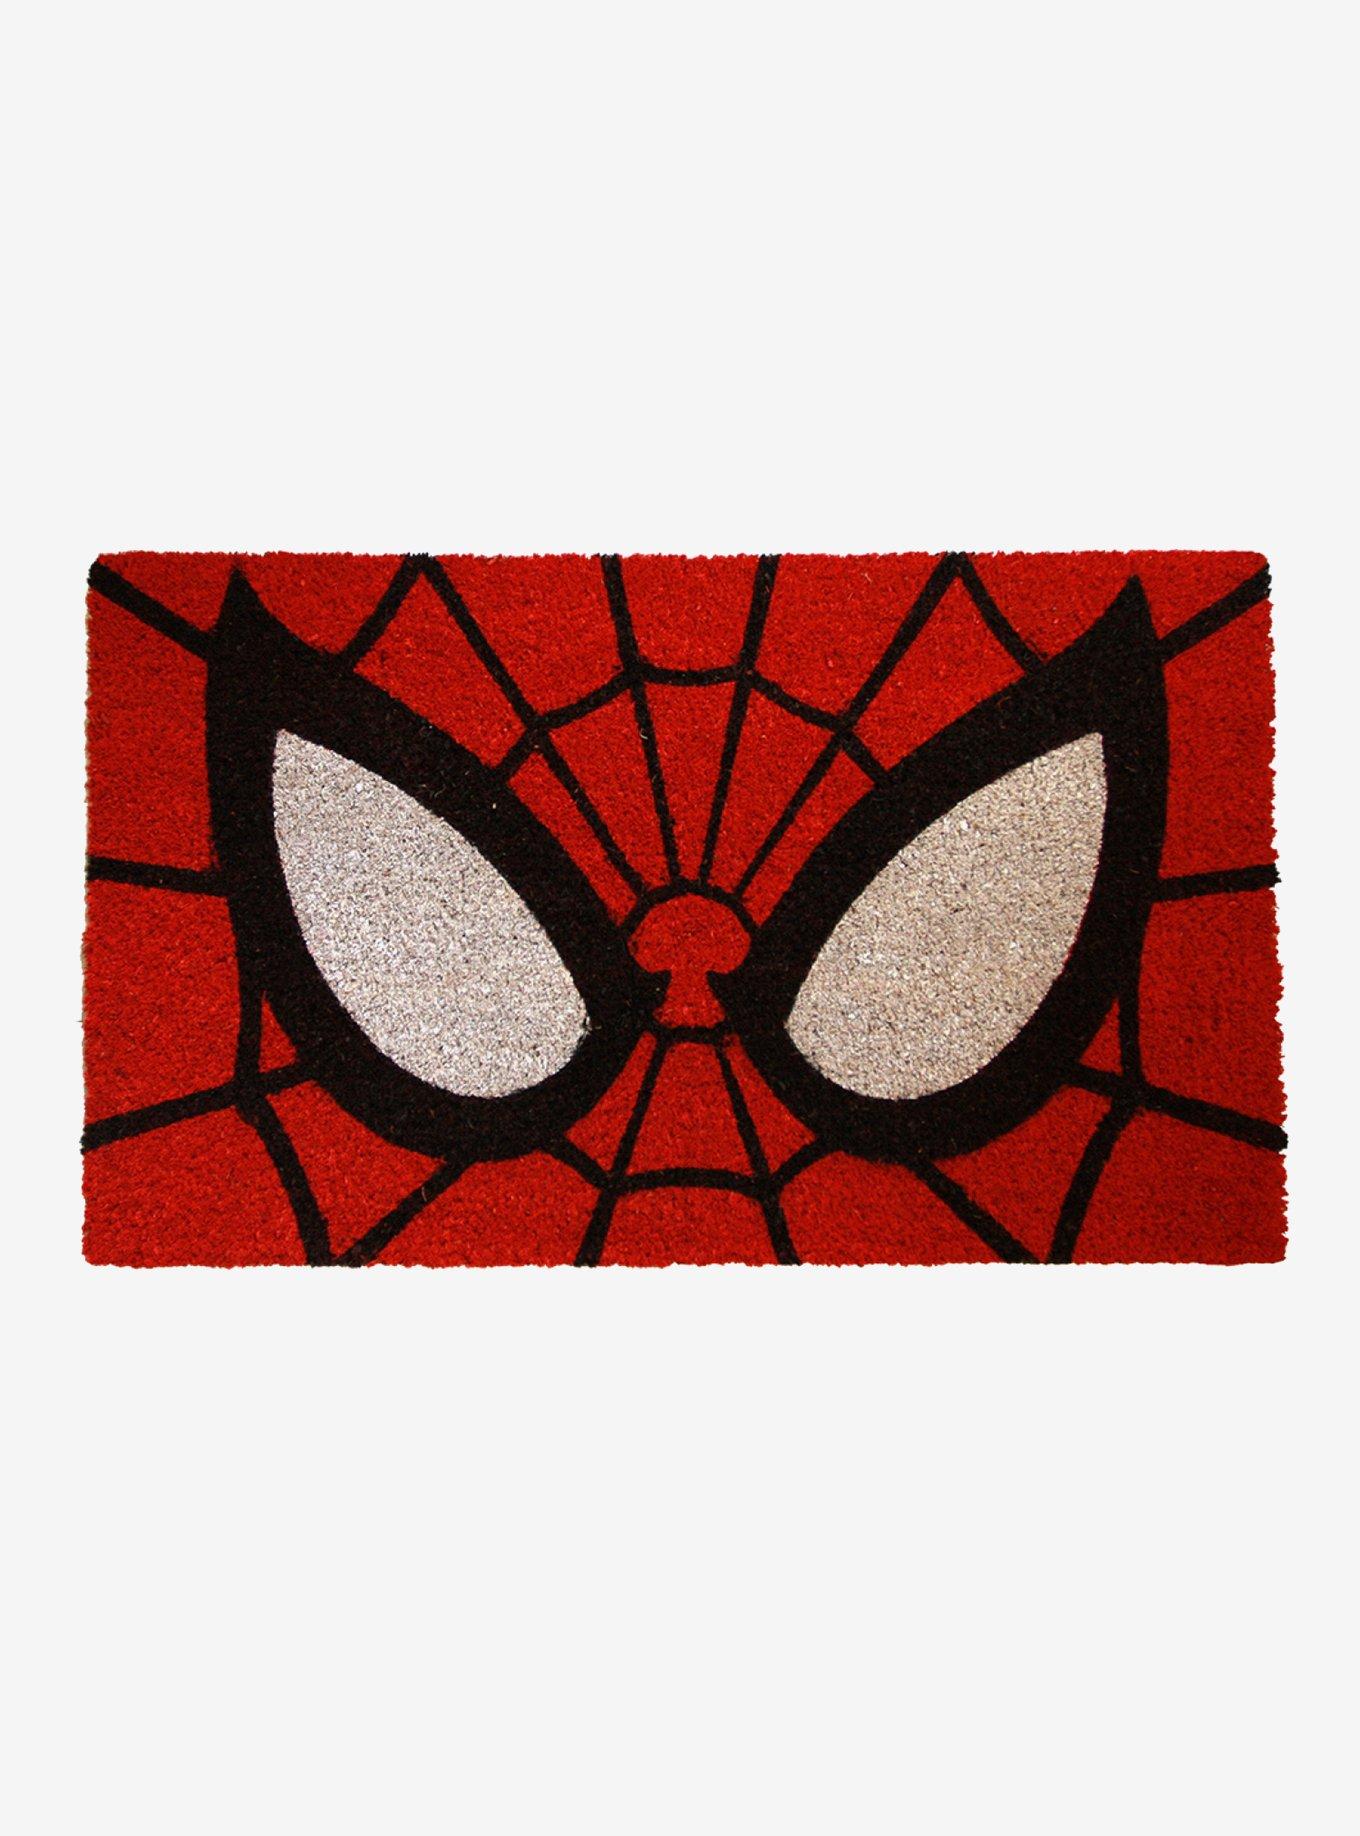 Marvel Comics Patch Spiderman Mask